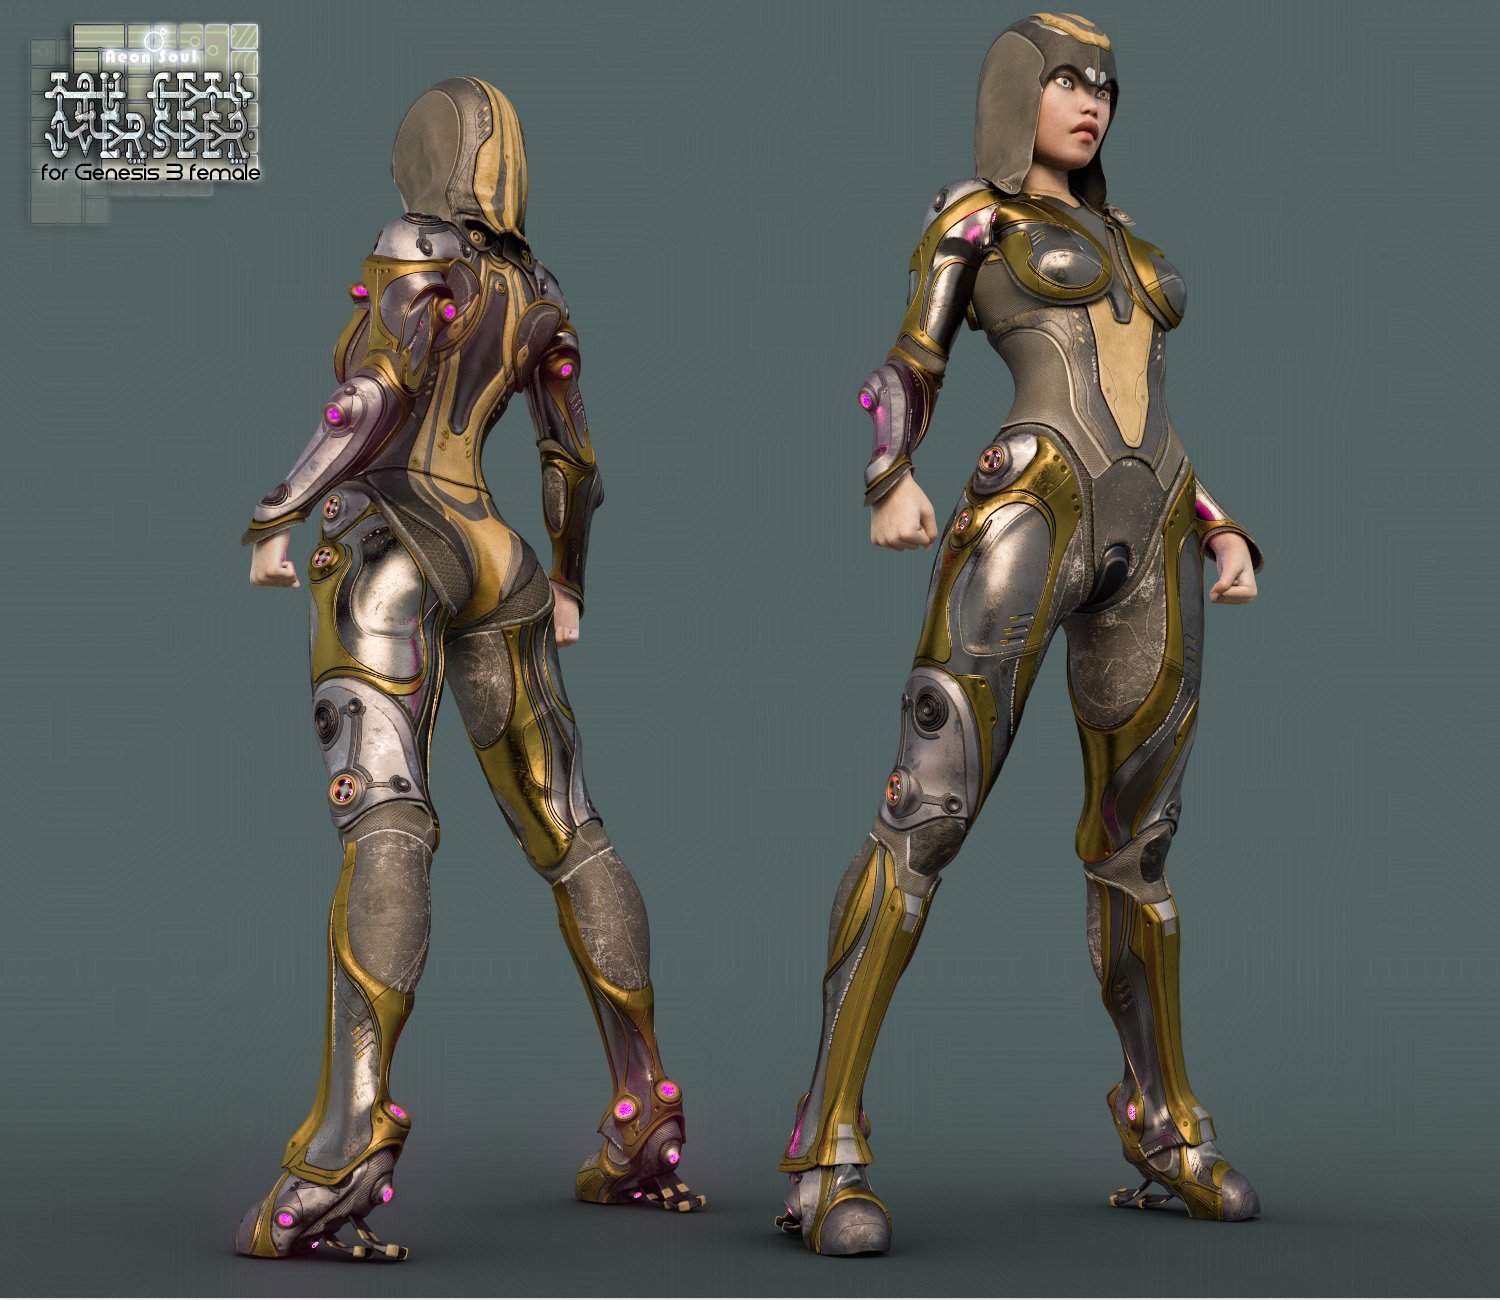 Tau Ceti Overseer Xps by: Aeon Soul, 3D Models by Daz 3D